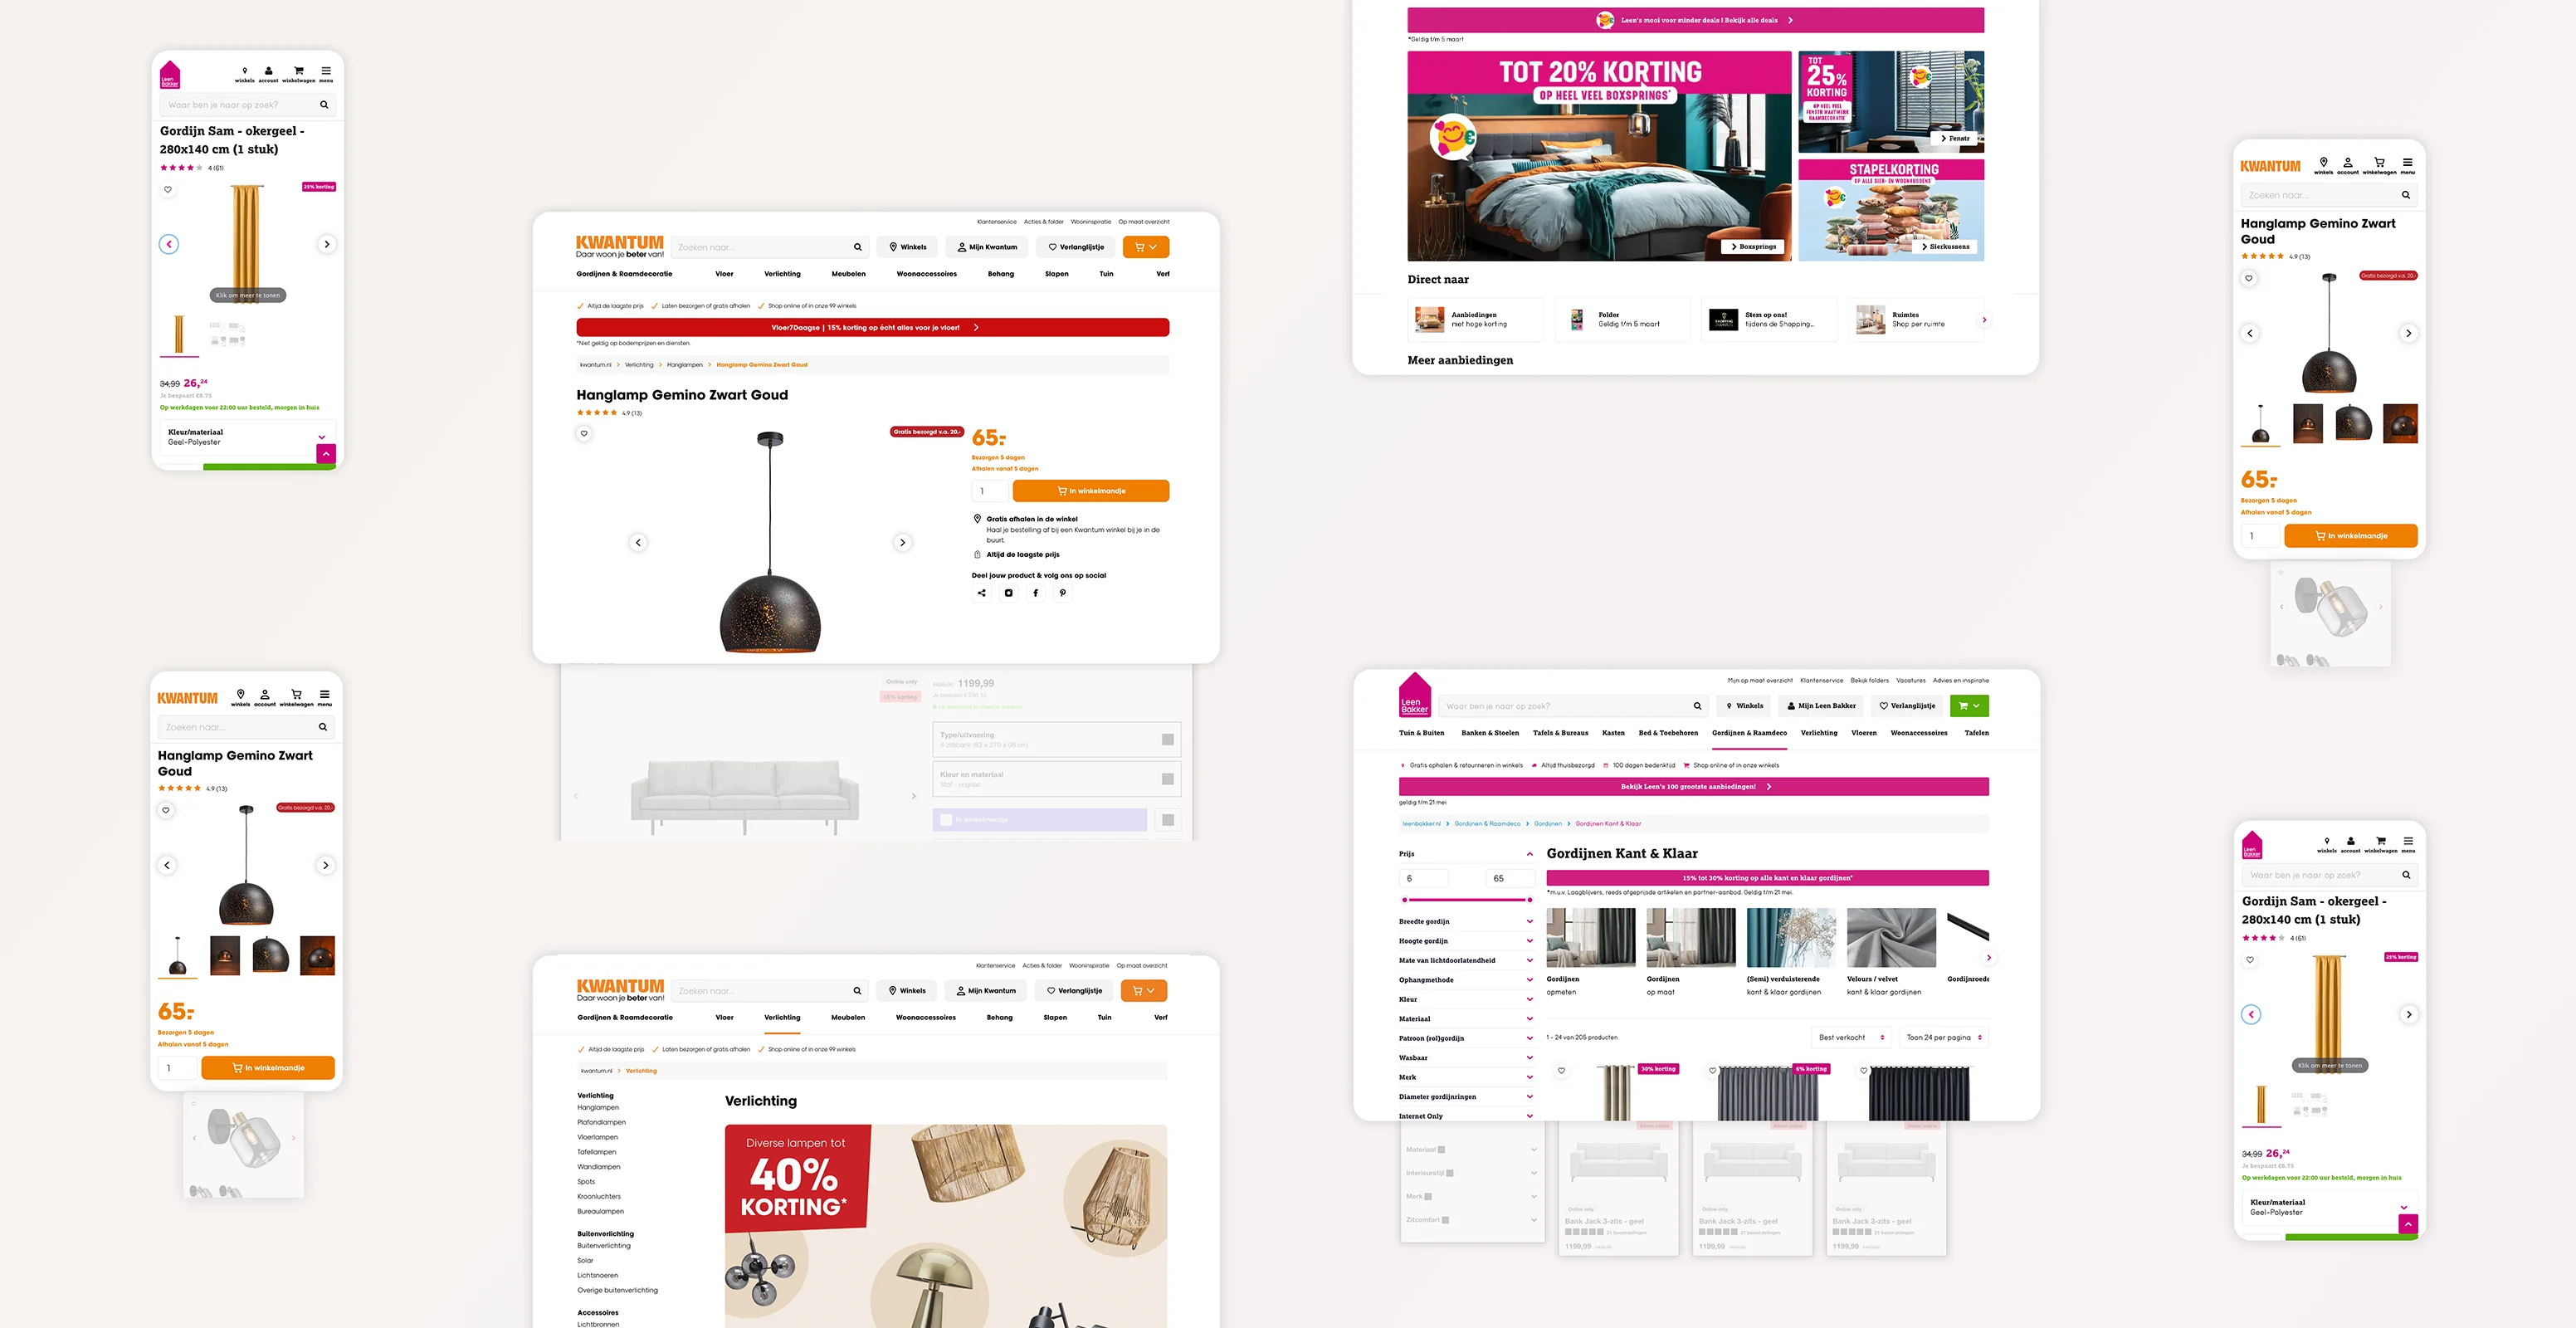 Homefashion Group: one e-commerce platform for multiple brands